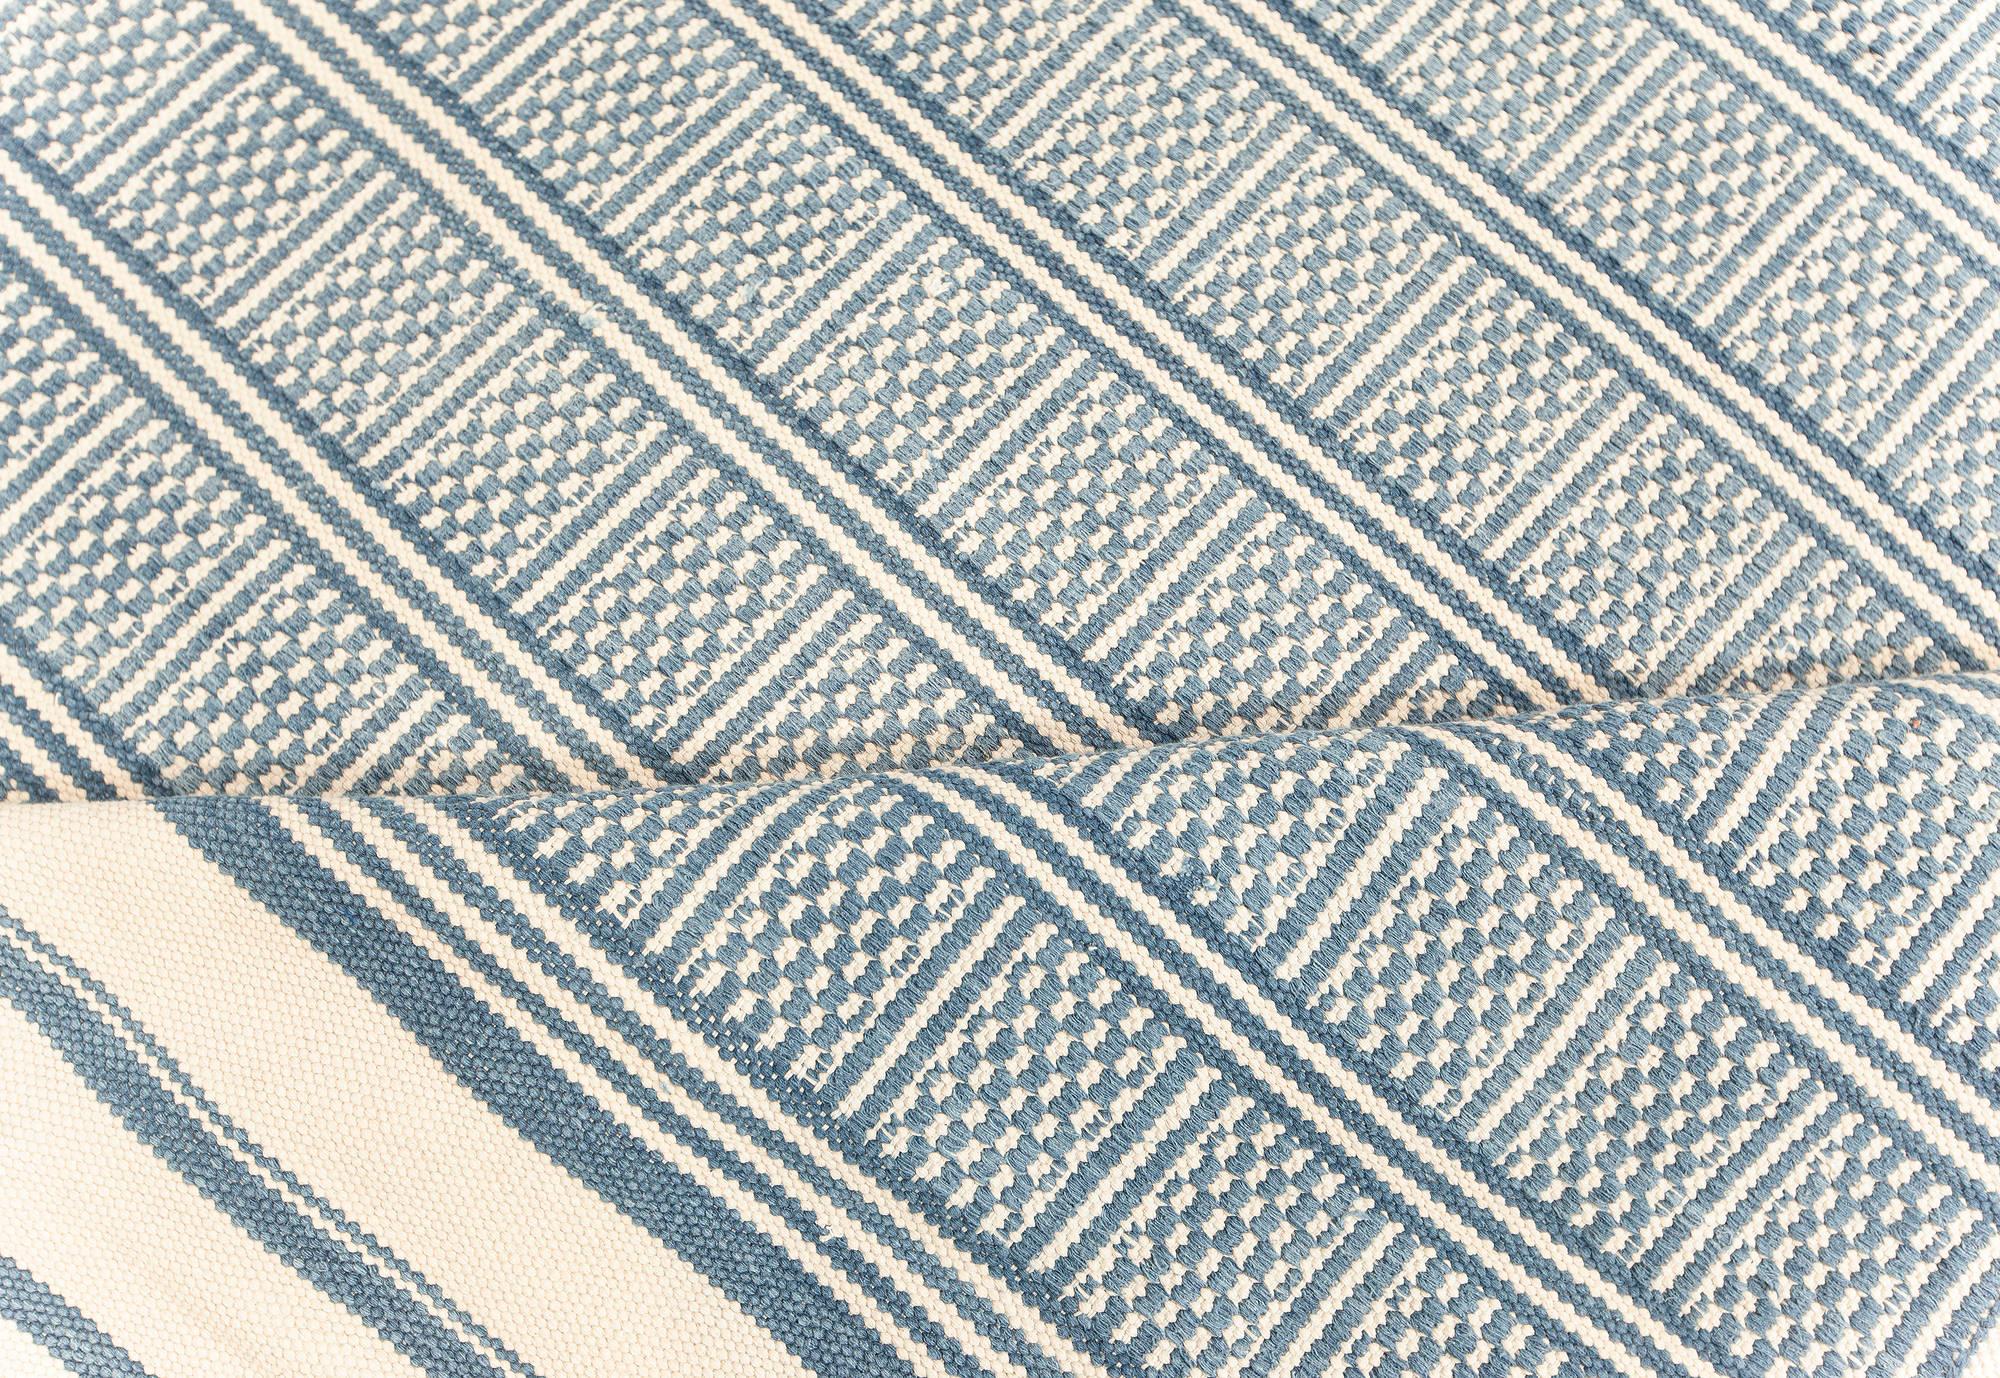 Modern geometric oversized dhurrie blue and white rug by Doris Leslie Blau.
Size: 16'0